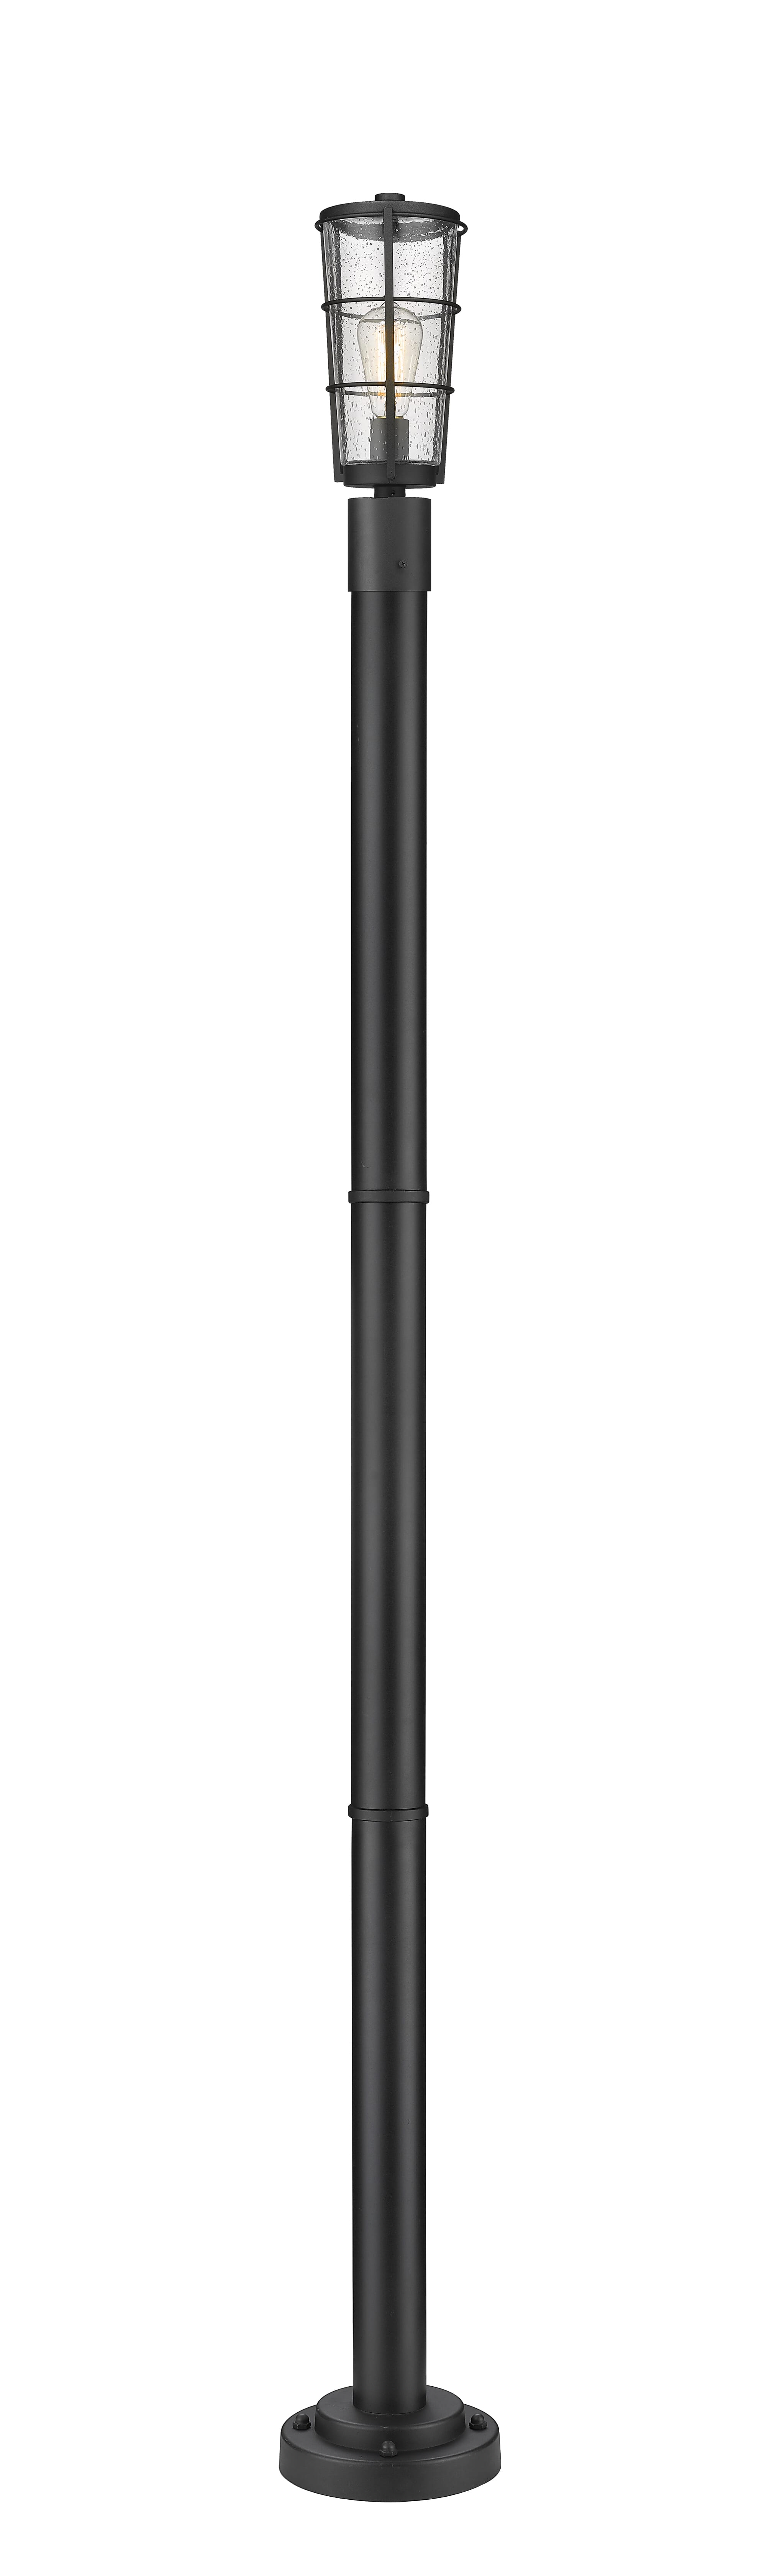 Helix 1-Light Outdoor Post Mounted Fixture Light In Black